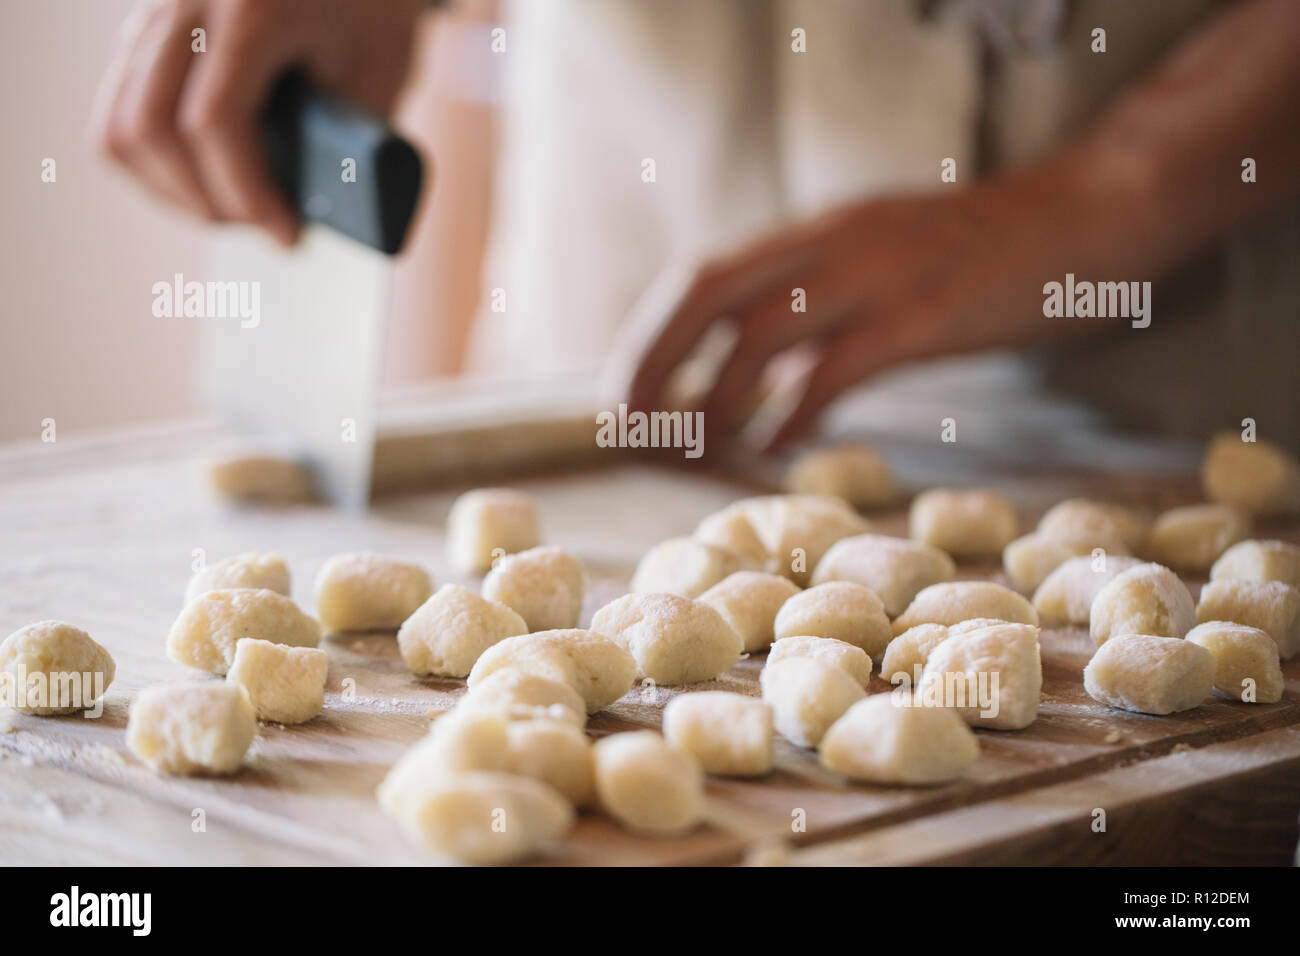 Woman cutting dough for gnocchi Stock Photo